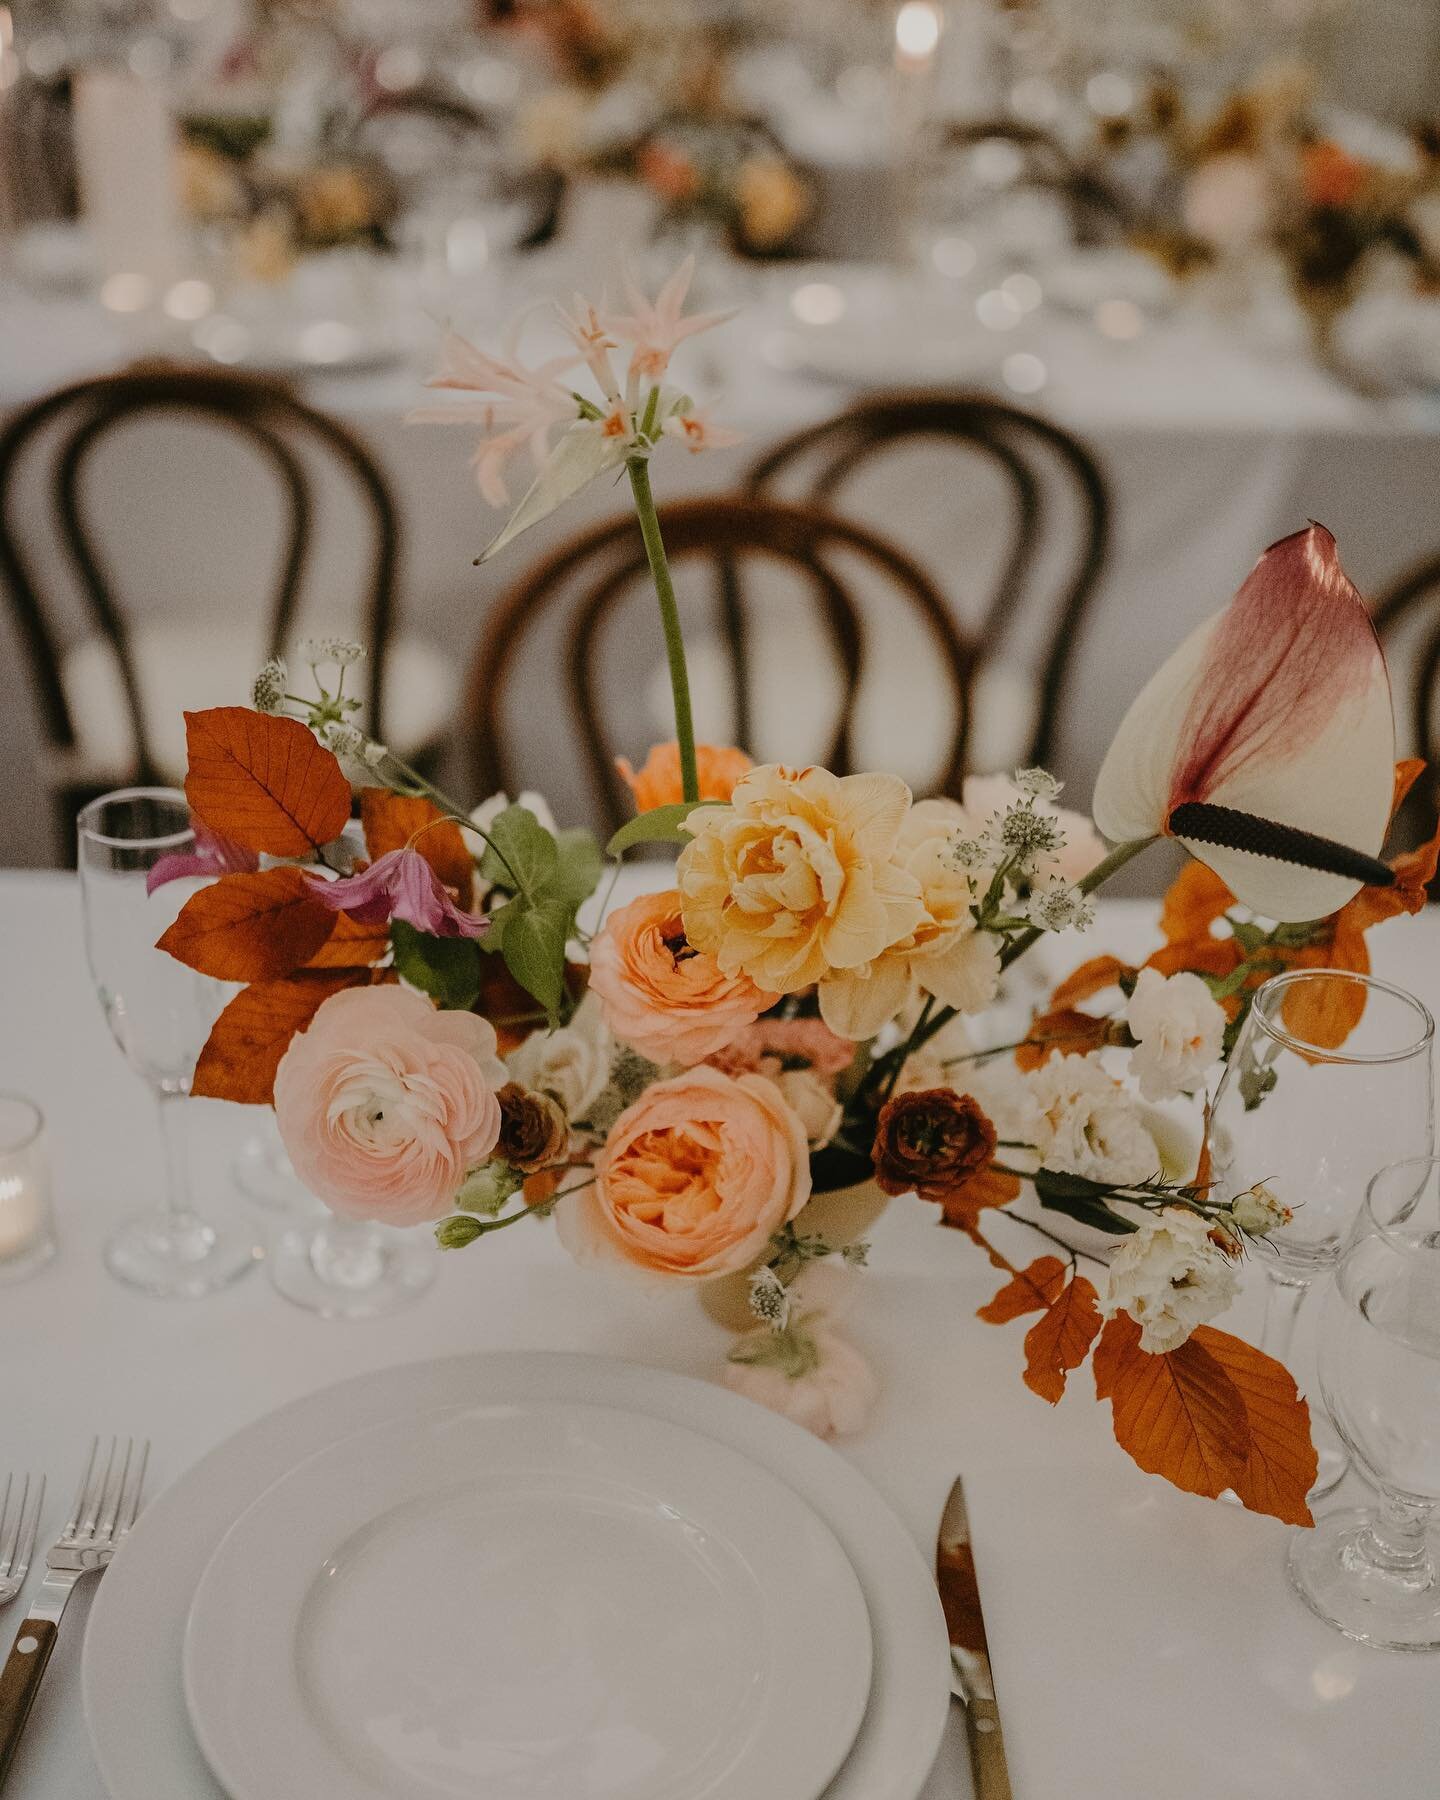 Tabletop details 🥂✨

Planning + Design | @wildheightsevents 
Florals | @aprilfloraldesign 
Photographer | @carole_cohen_photography 
Beauty | @akiyo_hairandmakeup